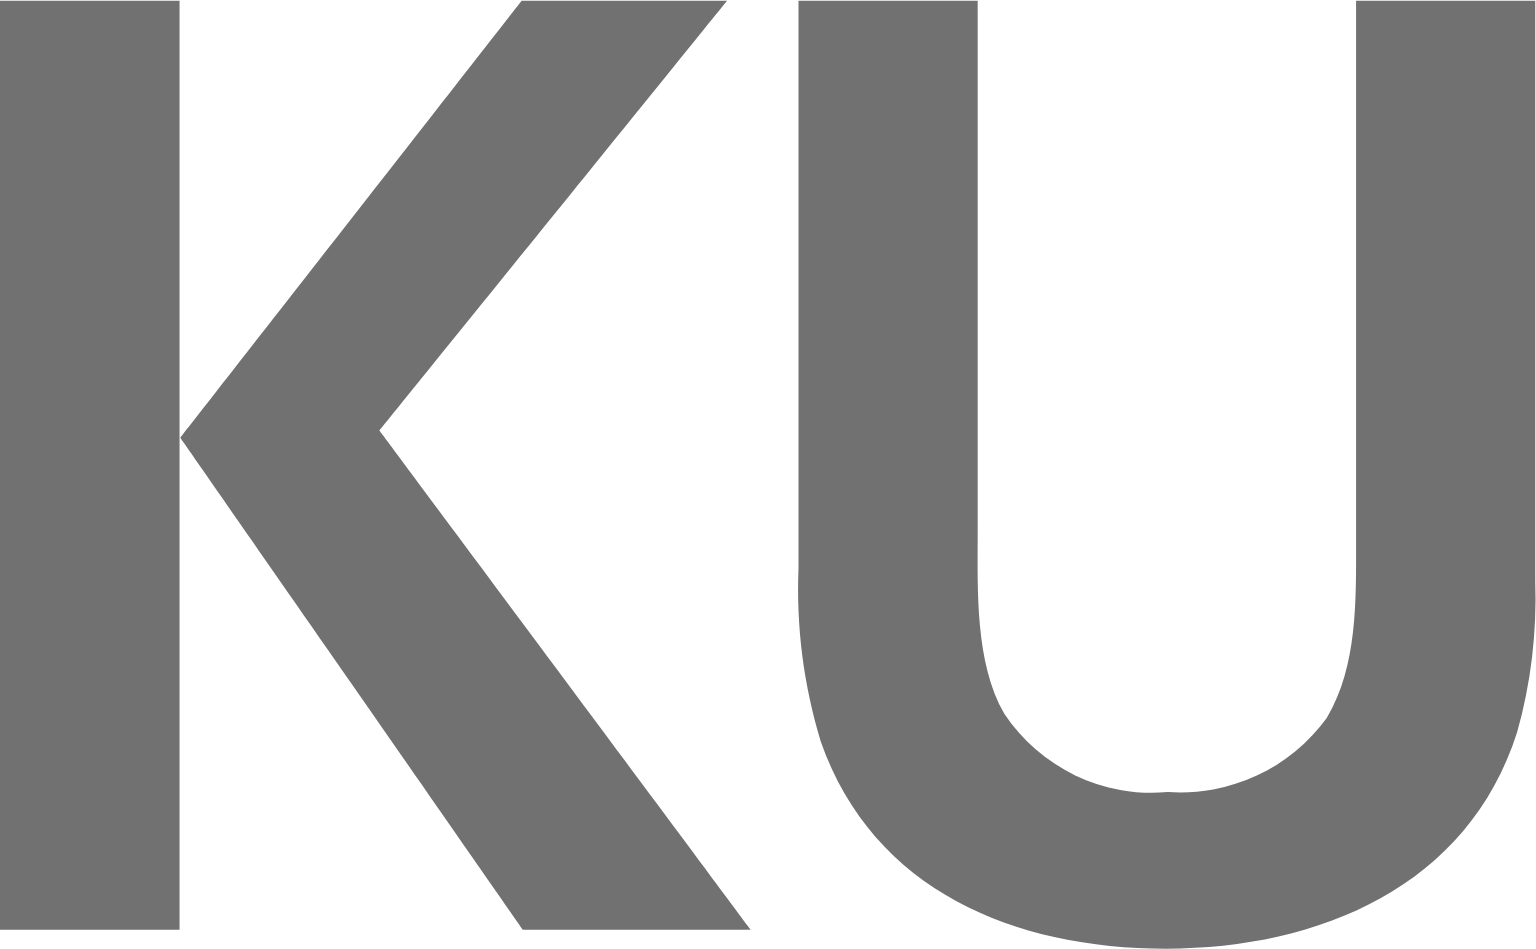 Kumho Petrochemical logo (transparent PNG)